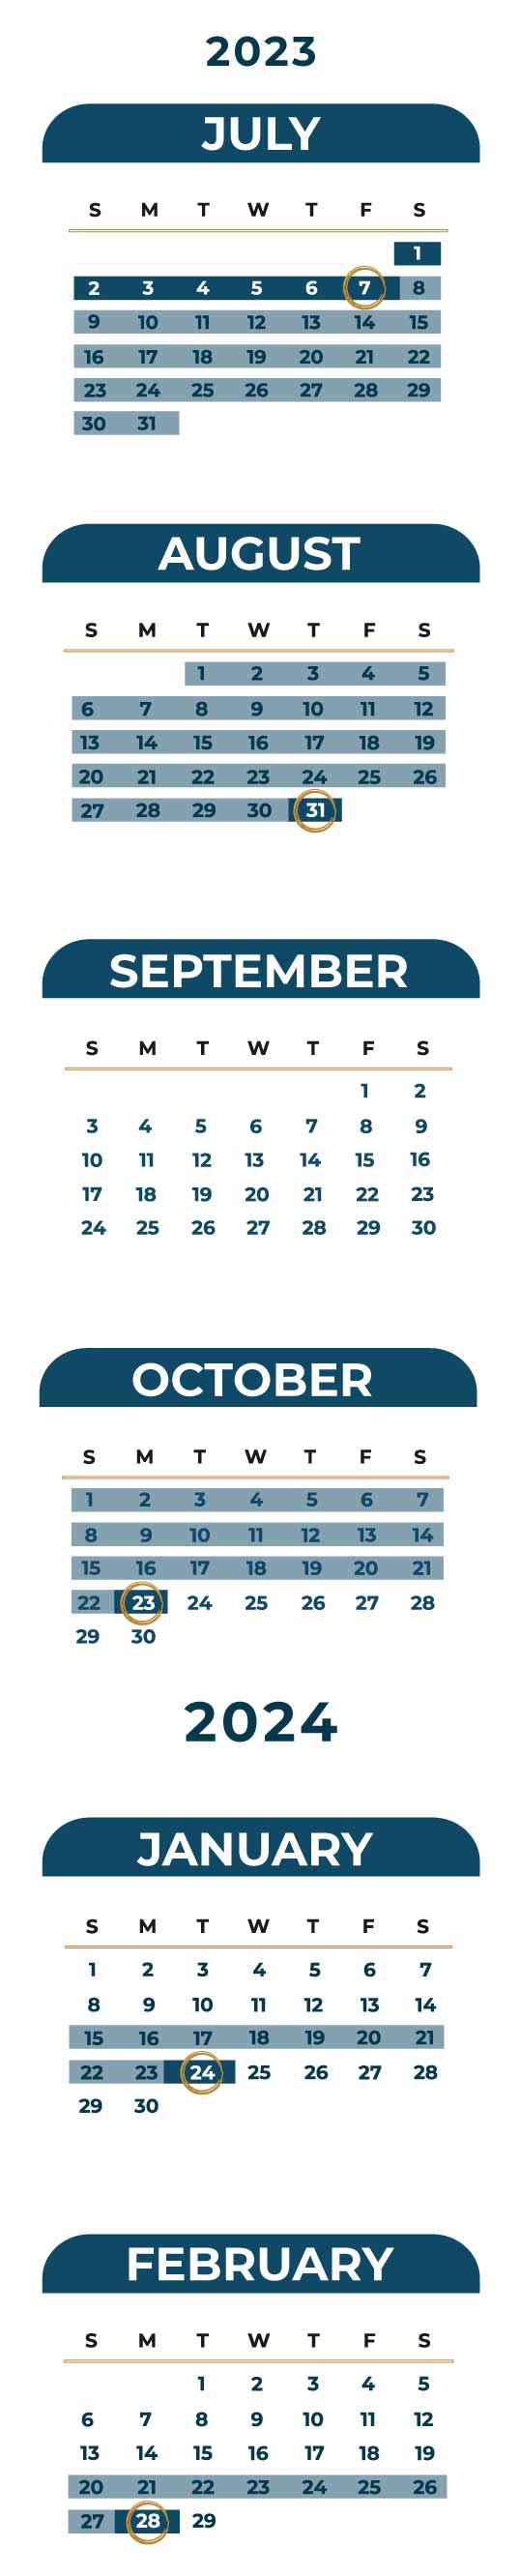 tax-calendar-mobile-2